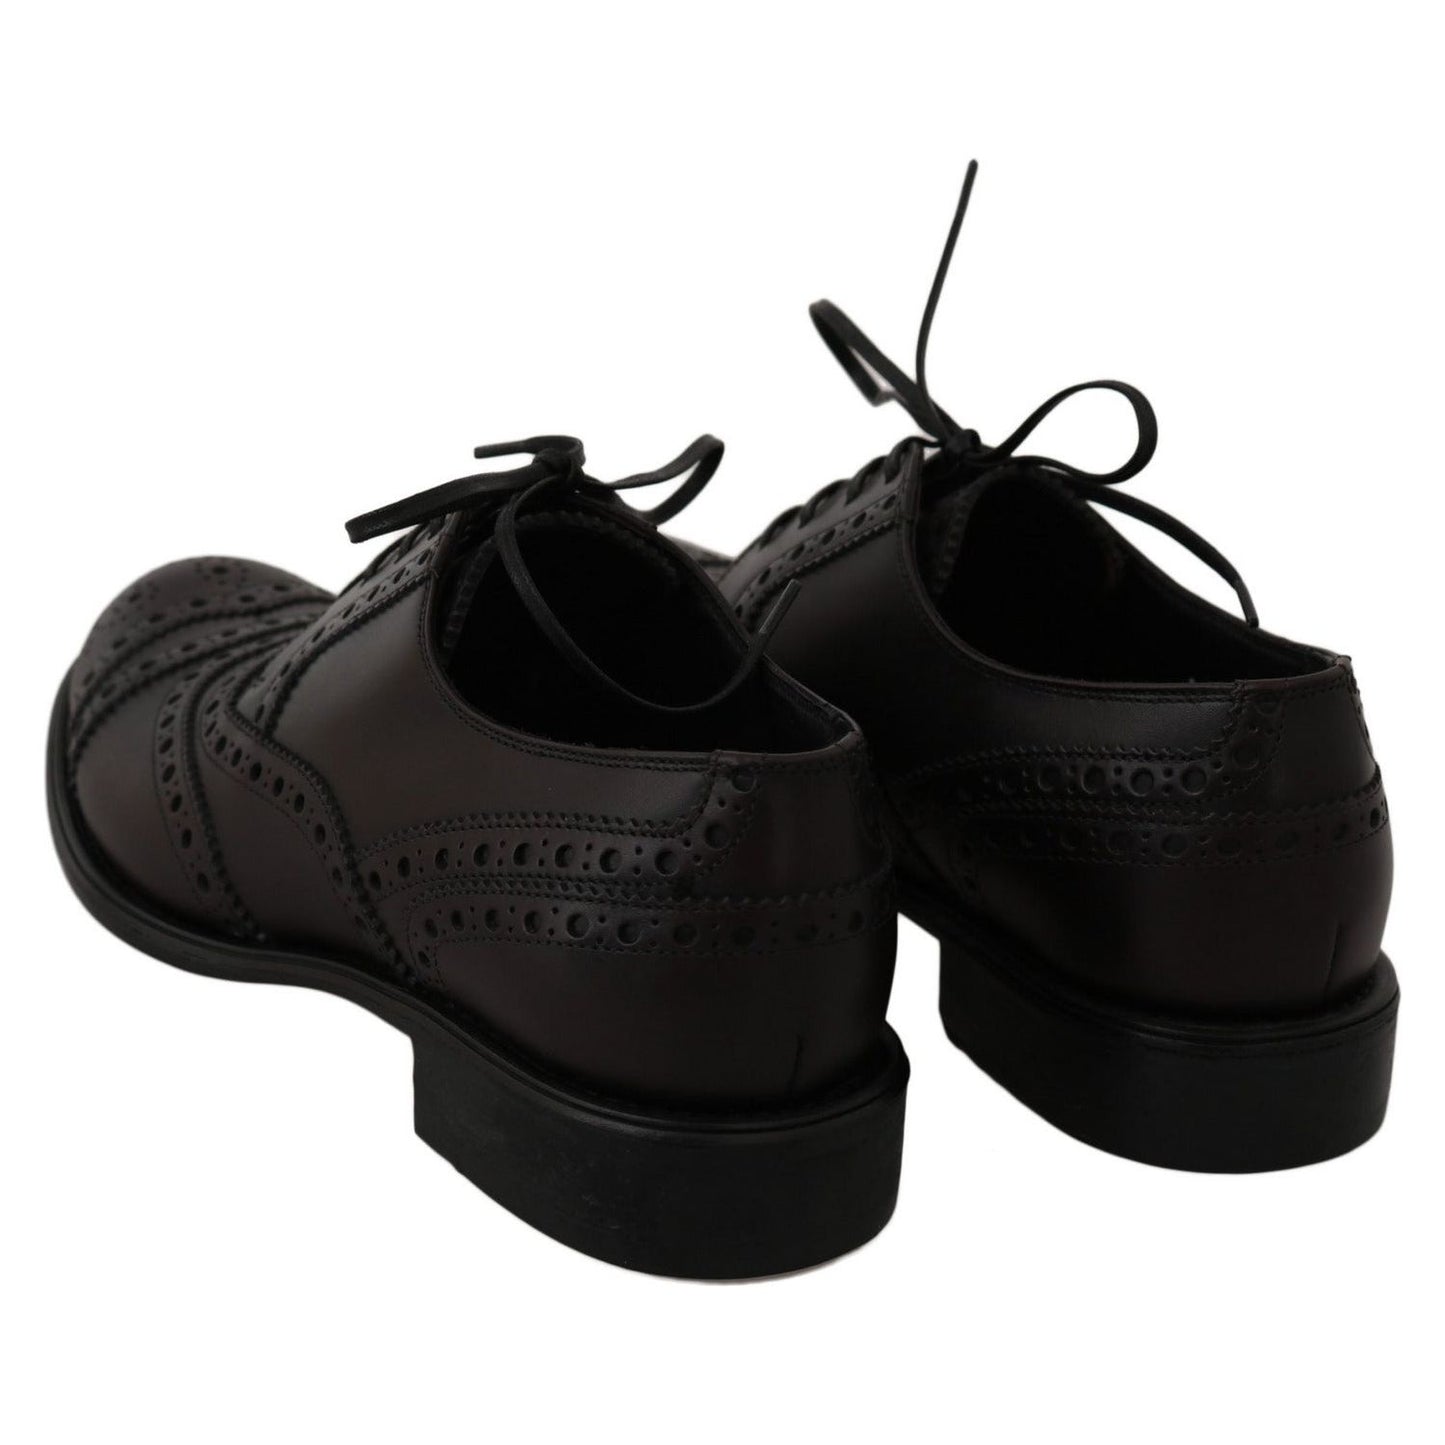 Dolce & Gabbana Elegant Bordeaux Wingtip Derby Dress Shoes Dress Shoes black-leather-wingtip-oxford-dress-shoes-1 IMG_8978-scaled.jpg